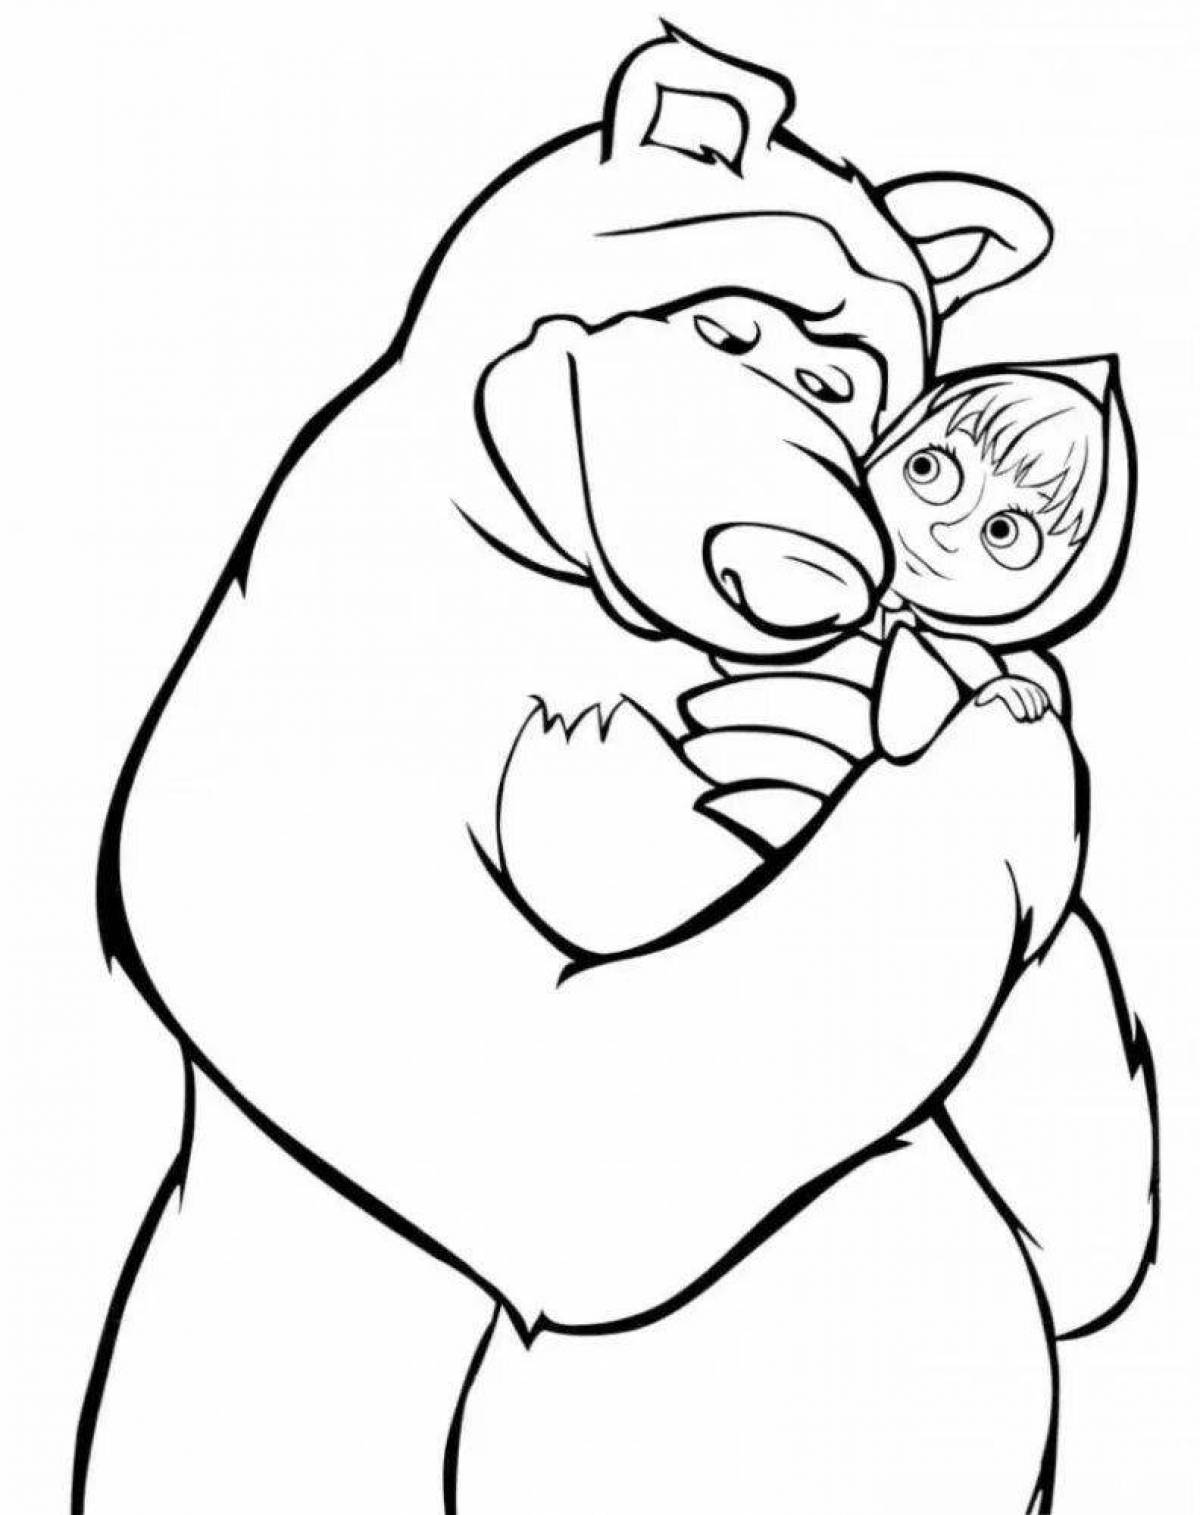 Tender hug coloring pages